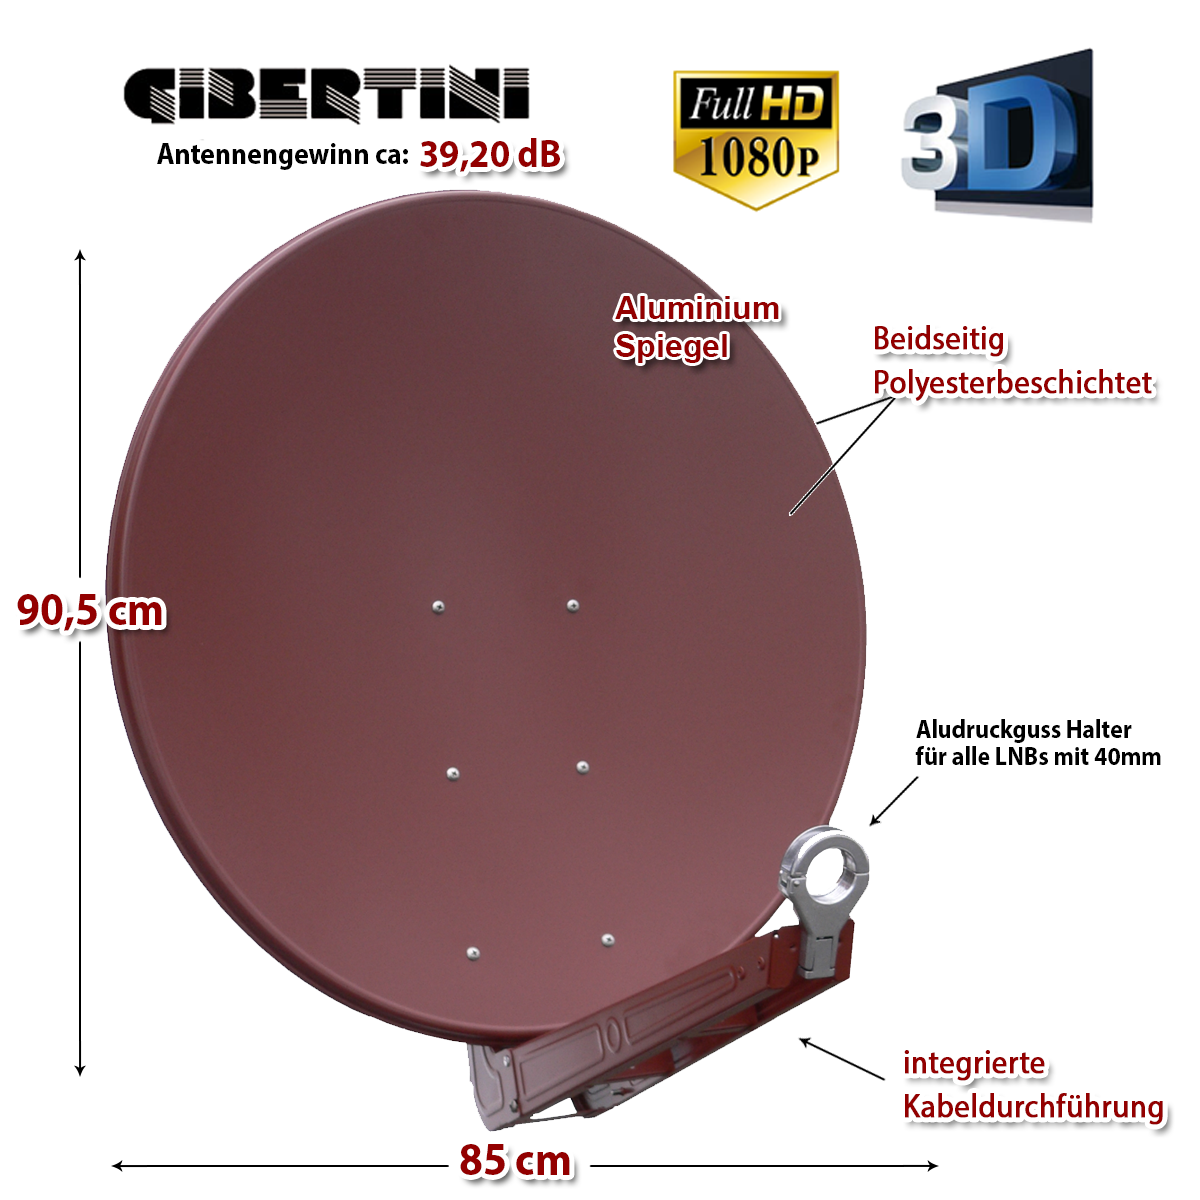 Profi Ziegelrot GIBERTINI Serie Satellitenschüssel SE 85cm